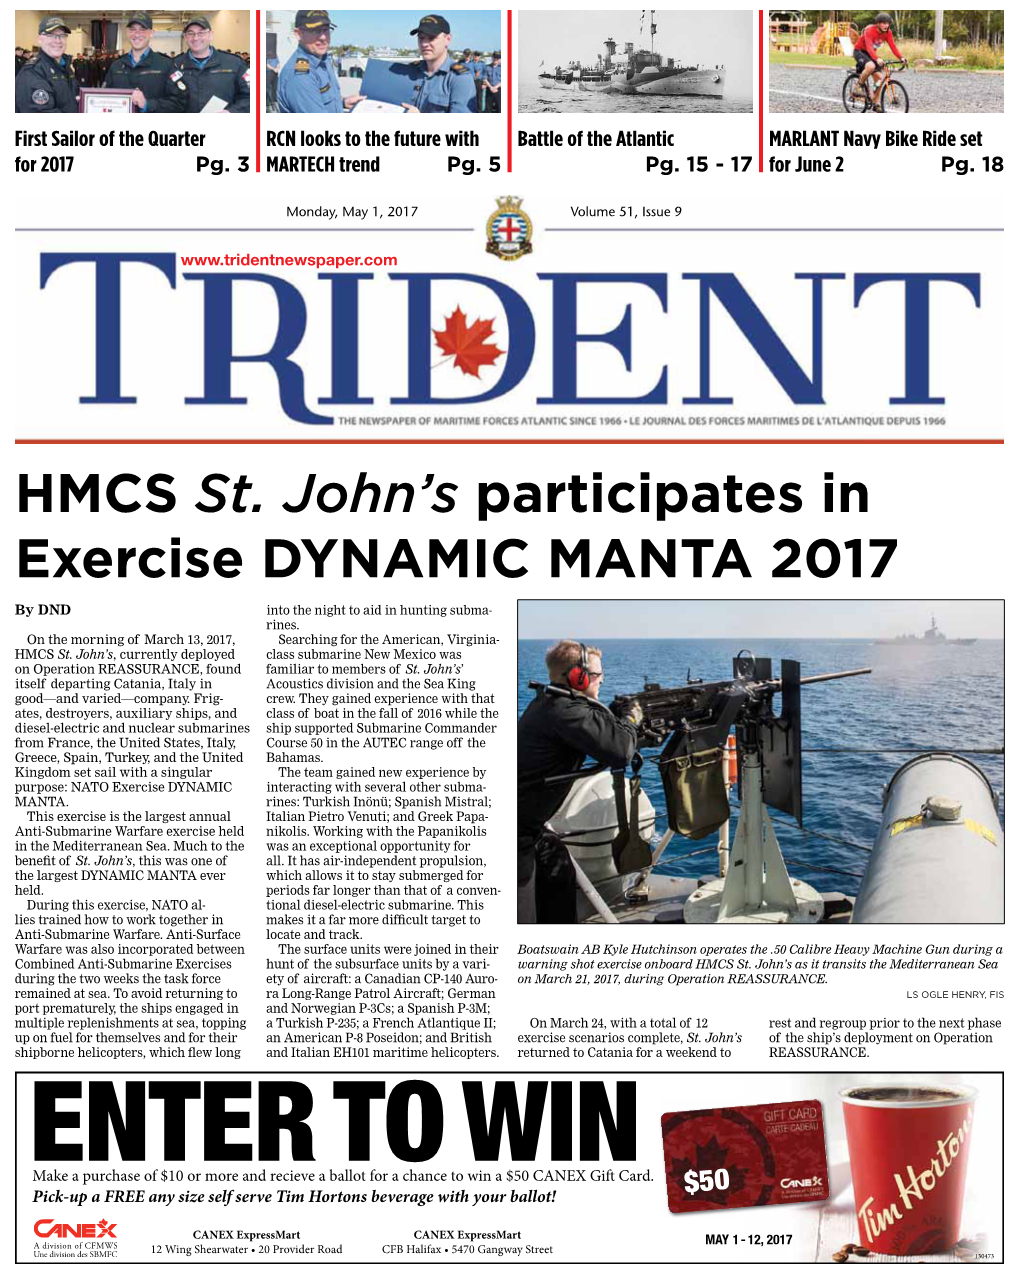 HMCS St. John's Participates in Exercise DYNAMIC MANTA 2017